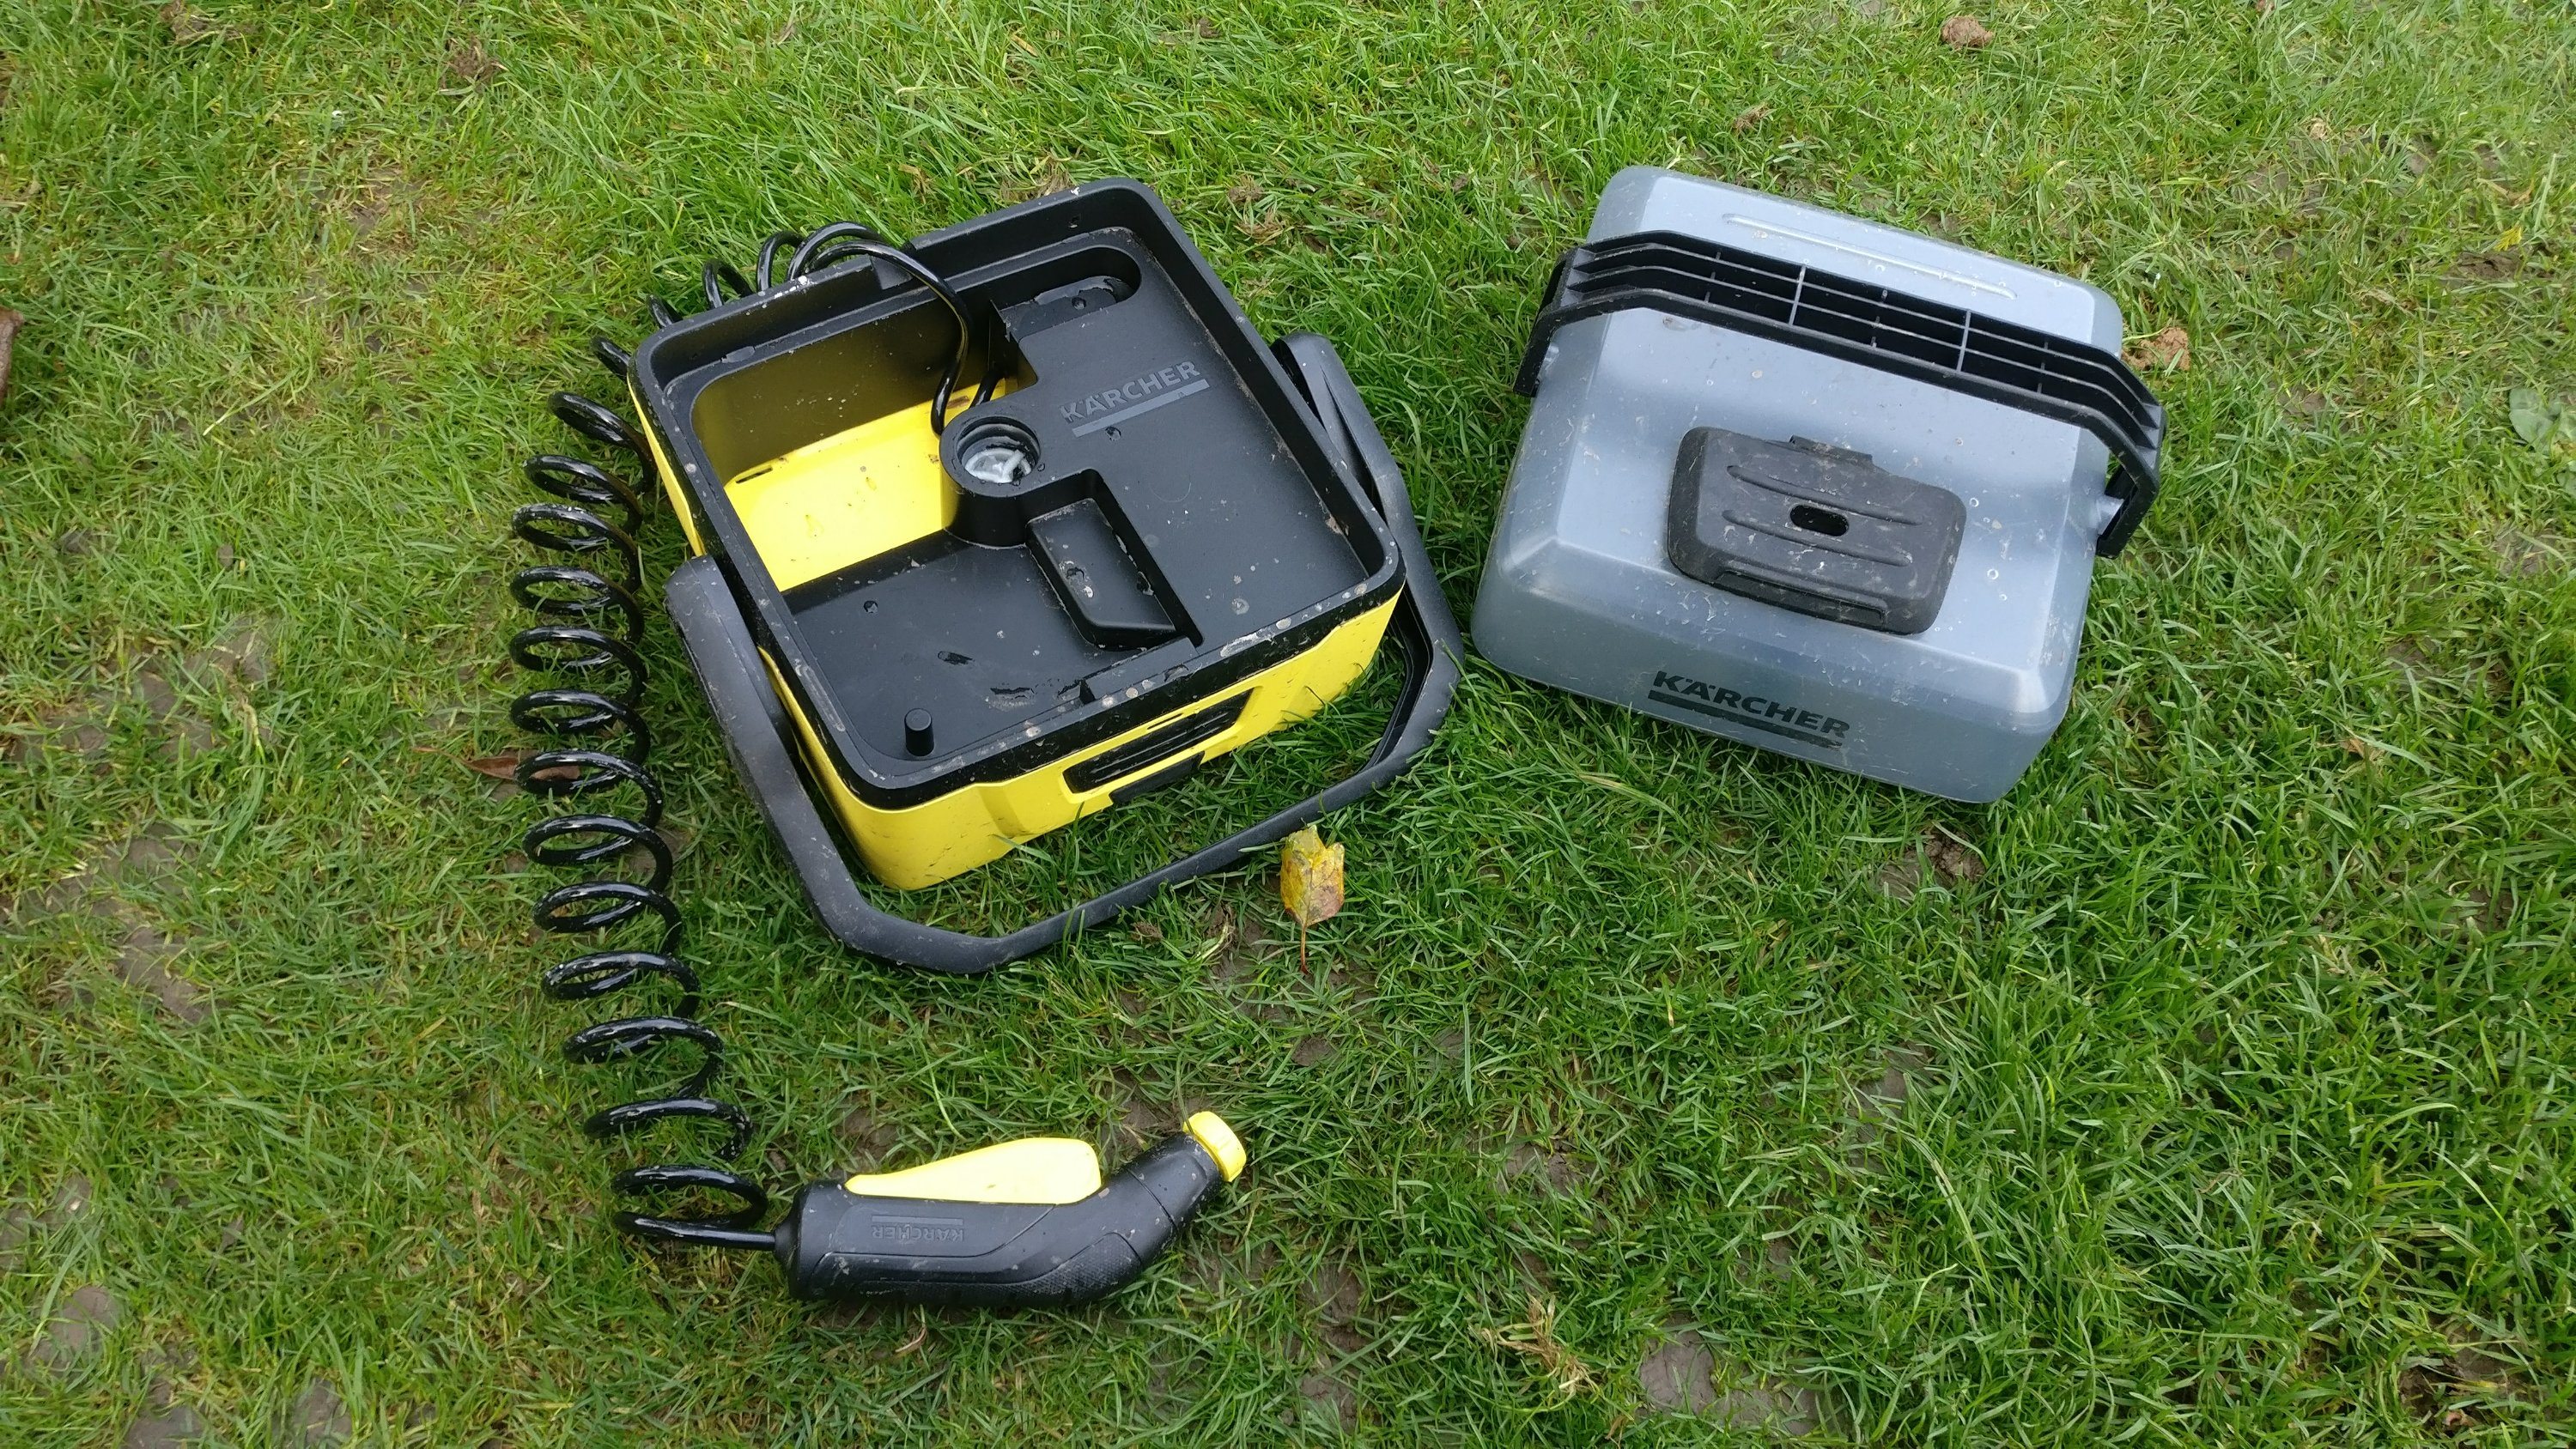 Käercher OC3 Portable Washer –